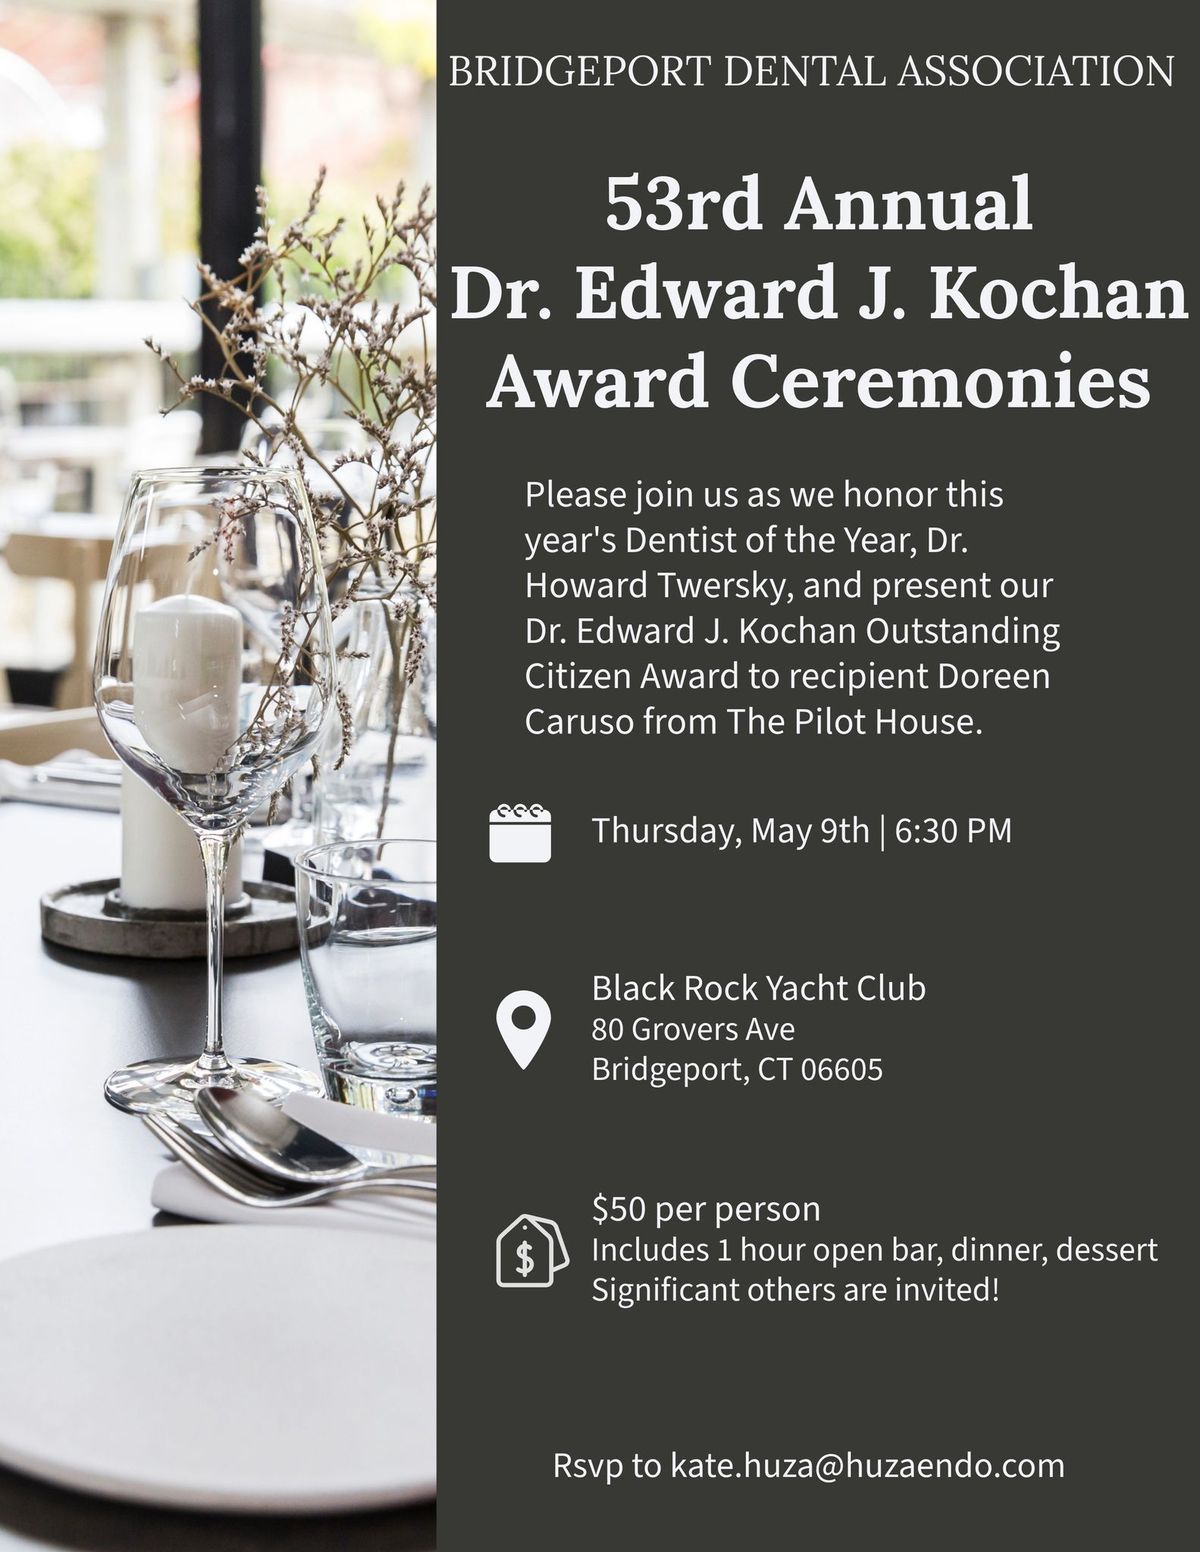 53rd Annual Dr. Edward J. Kochan Award Ceremonies